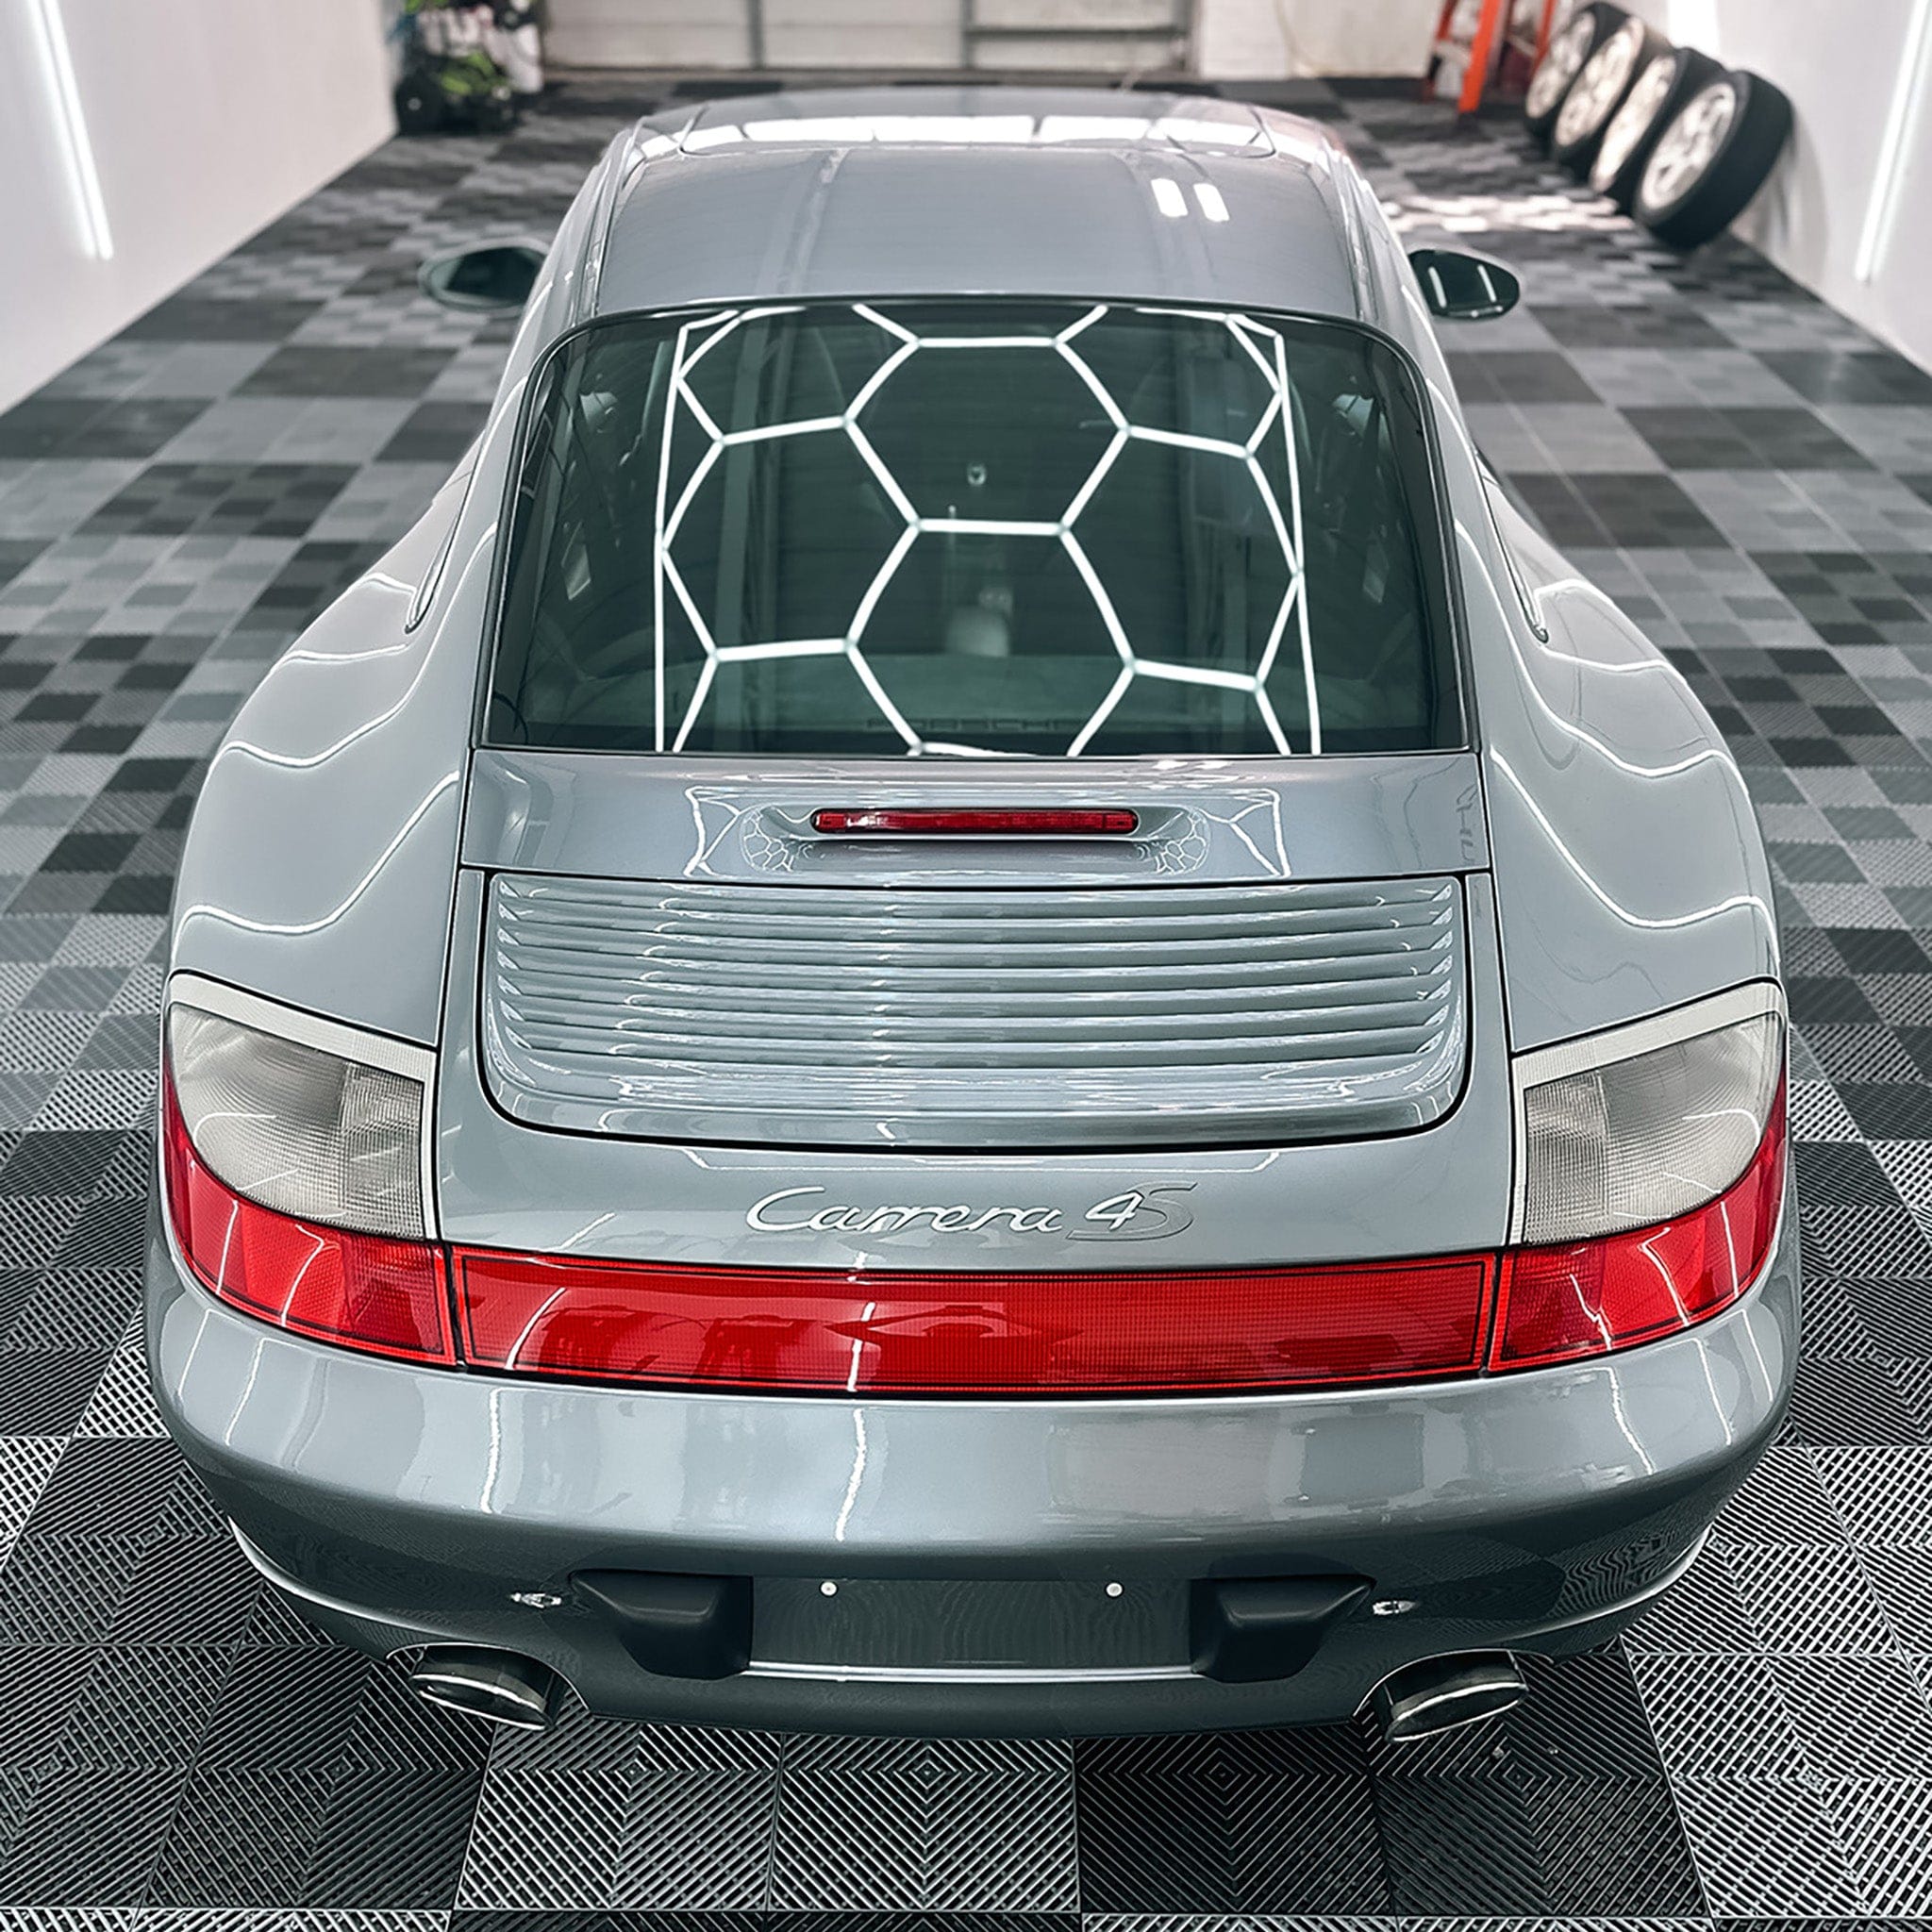 Porsche Carrera 4S Crystal Serum Ceramic Coating - Martin Auto Detailing